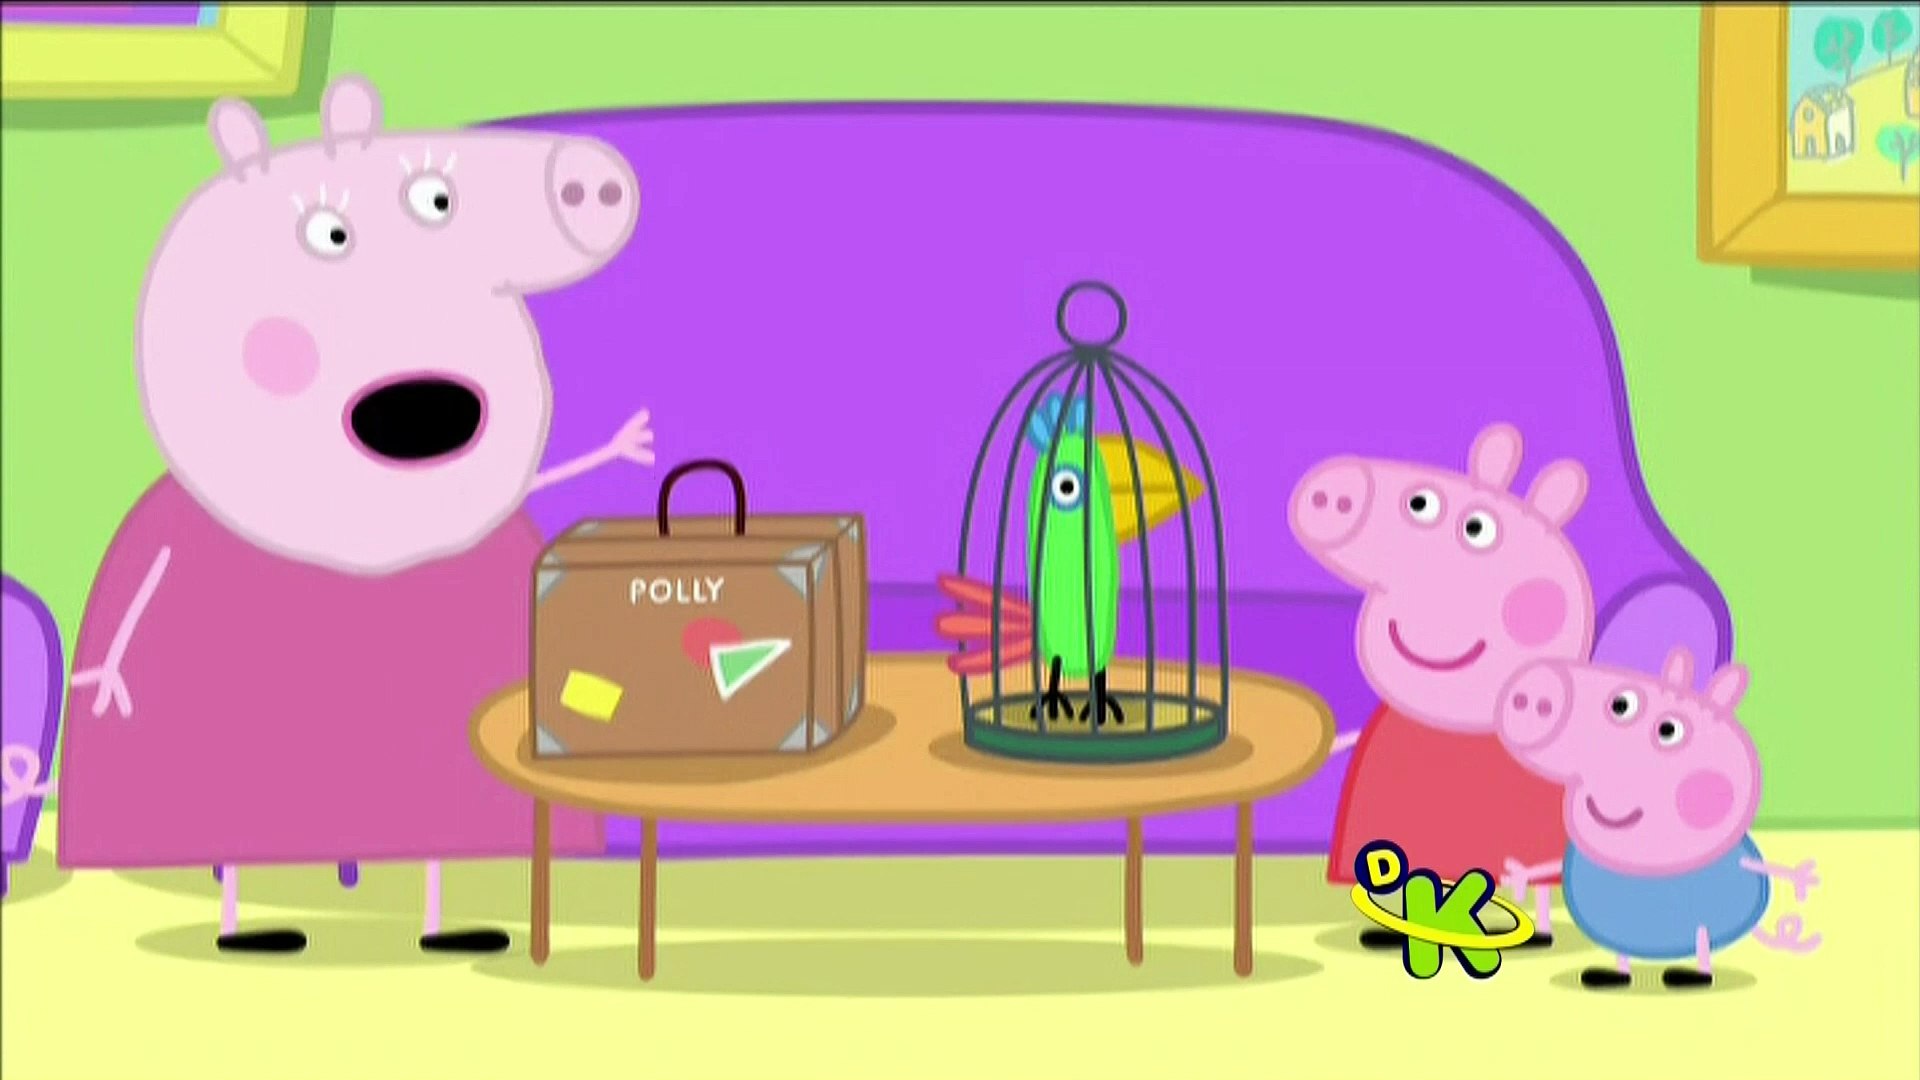 Peppa Pig Português Brasil ❤️ Peppa - HD - Desenhos Animados, Peppa Pig  Português Brasil ❤️ Peppa - HD - Desenhos Animados, By Peppa Pig em  Português Brasil - Canal Oficial